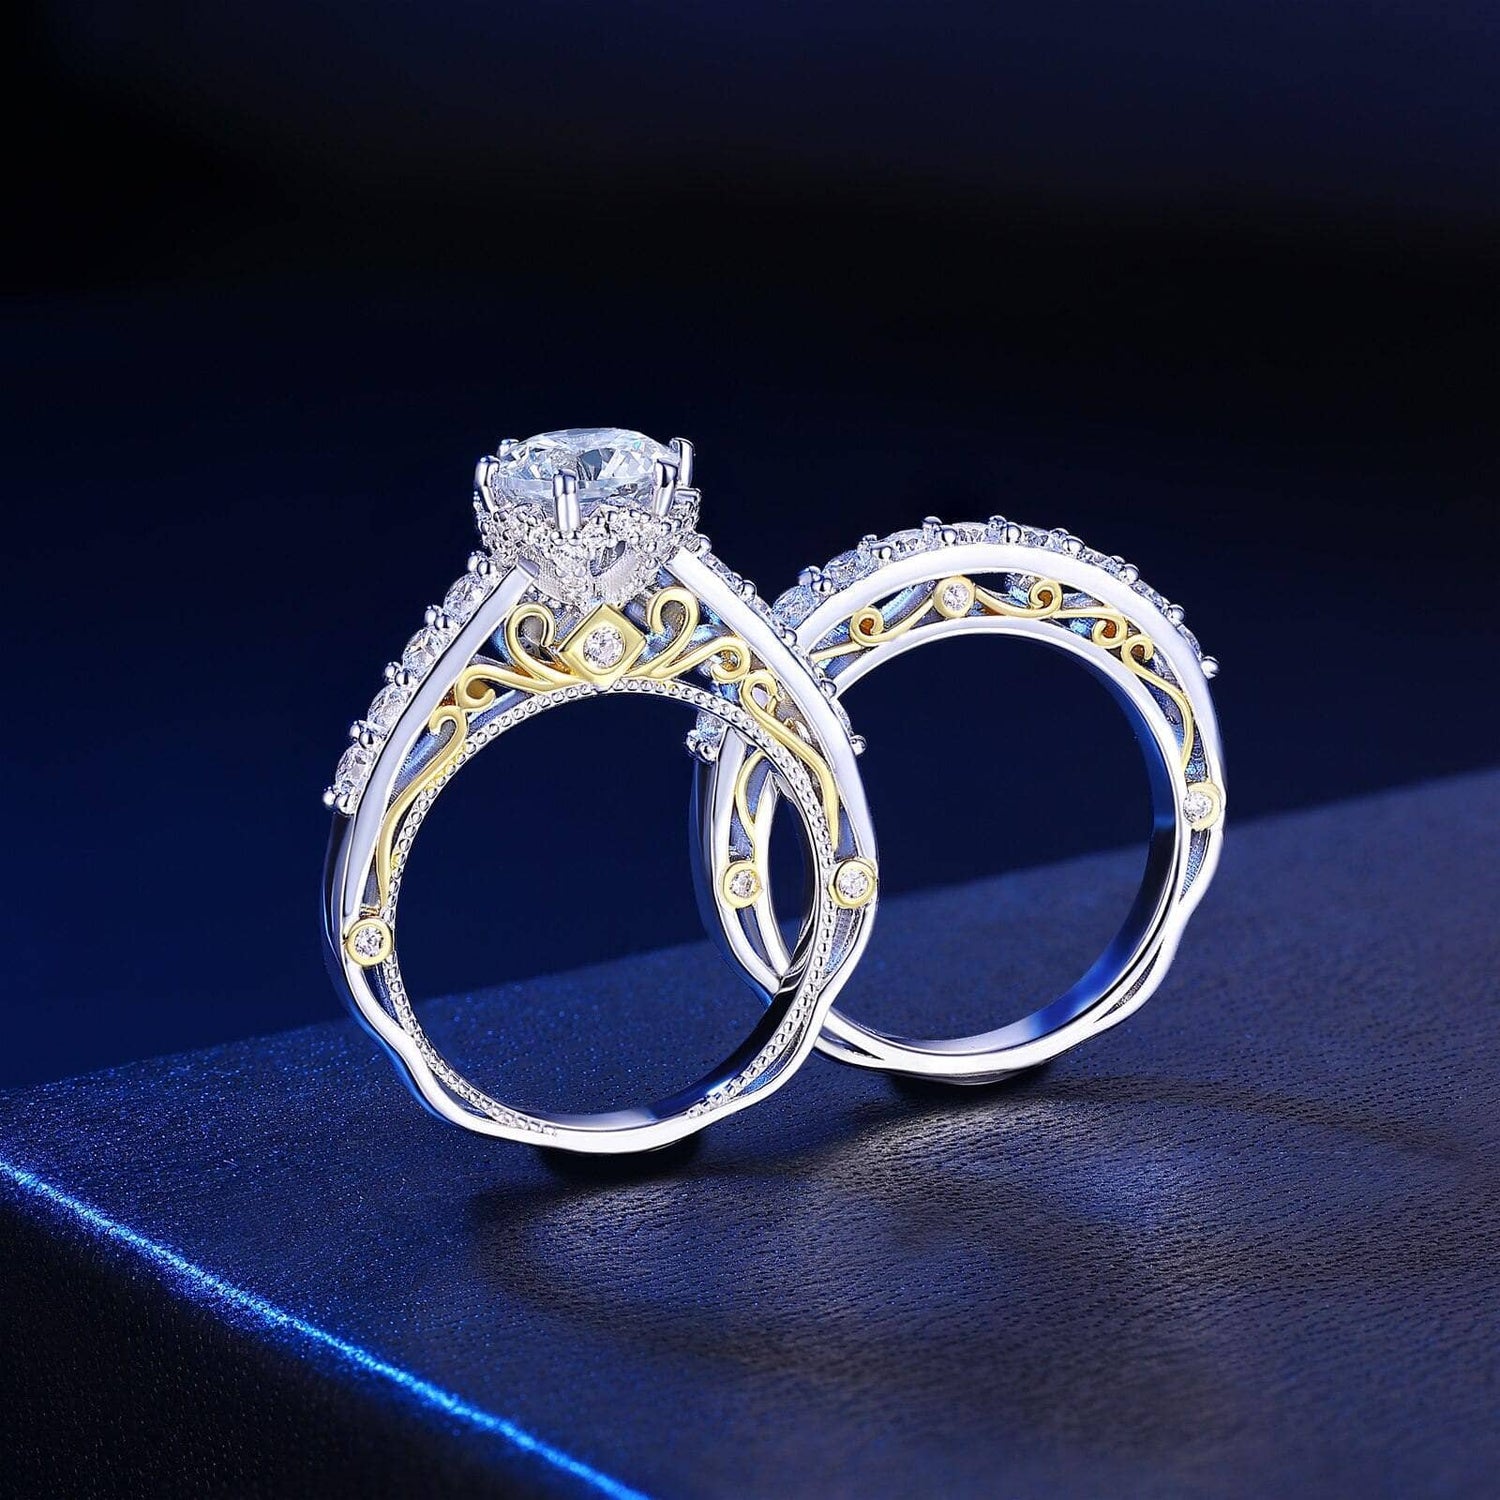 Designer Engagement Rings - Wedding Diamonds